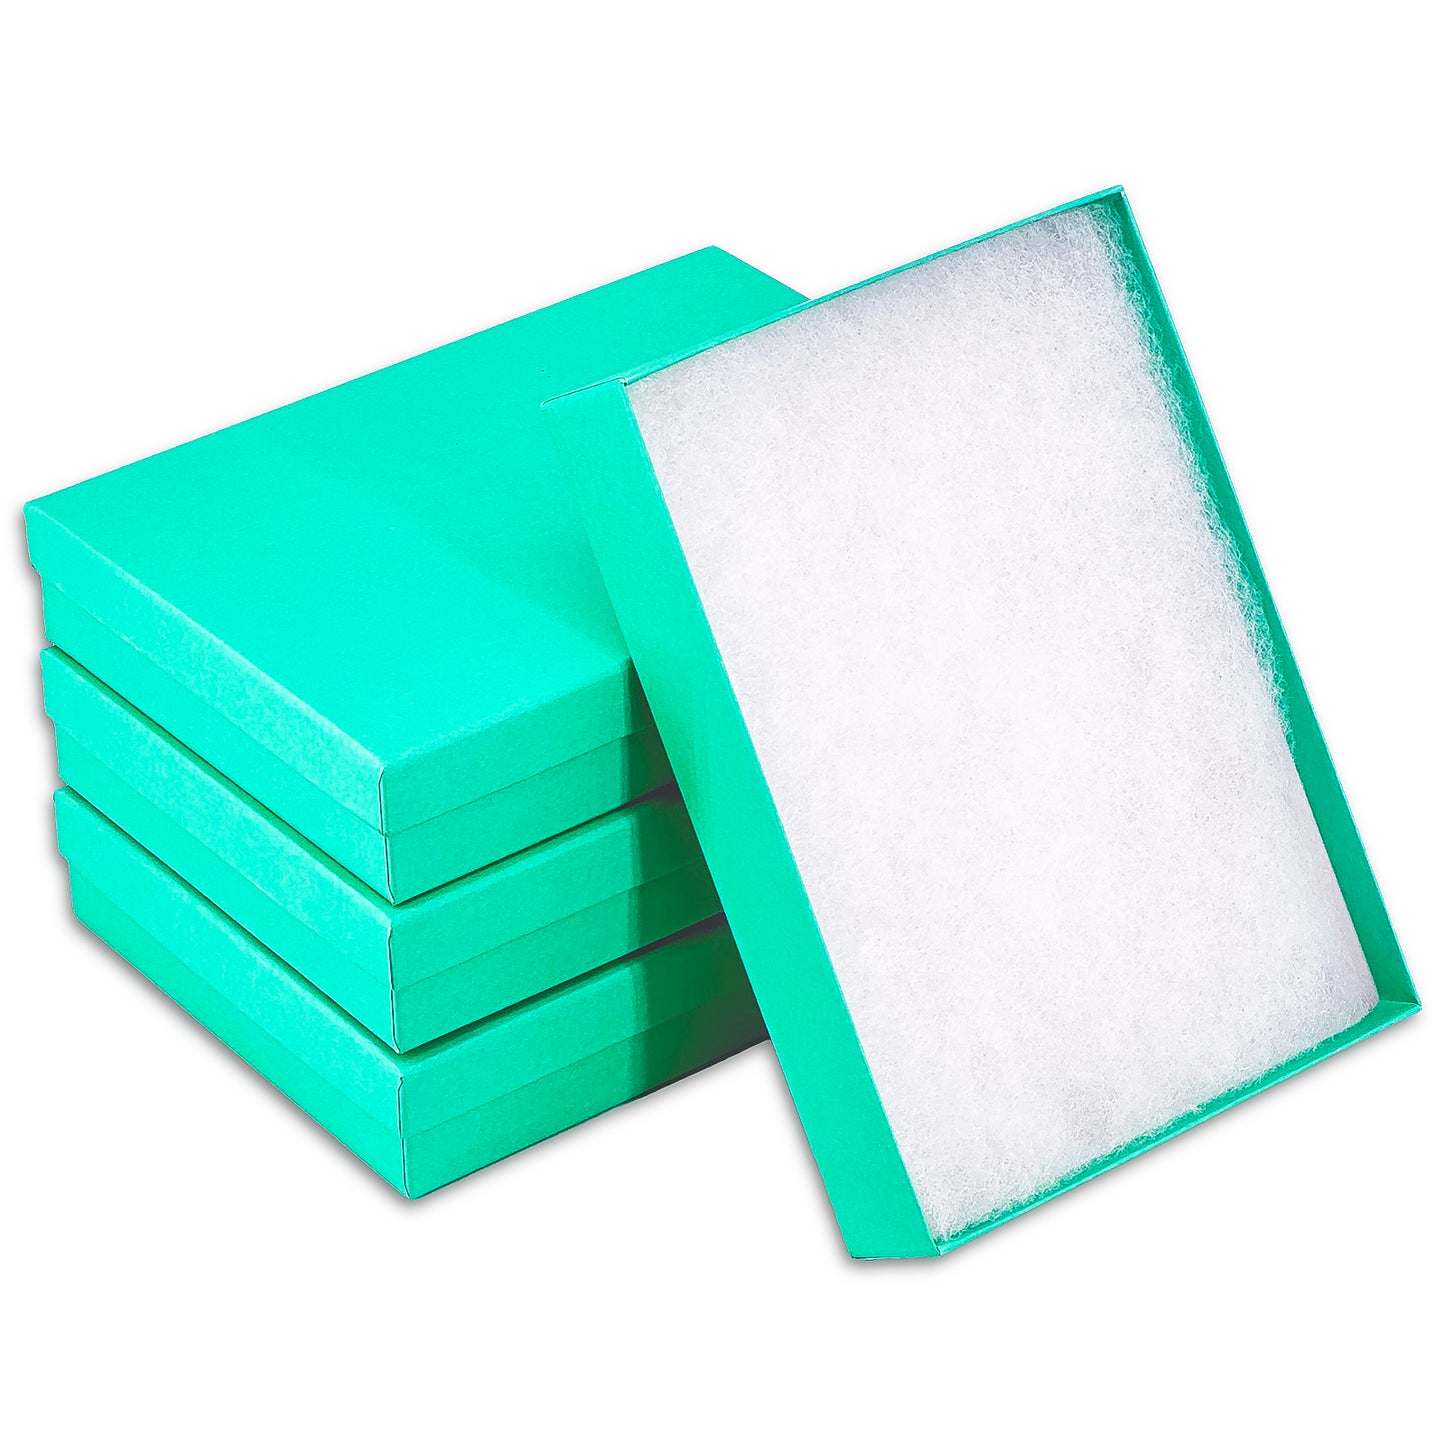 6 1/8" x 5 1/8" x 1 1/8" Teal Cotton Paper Box